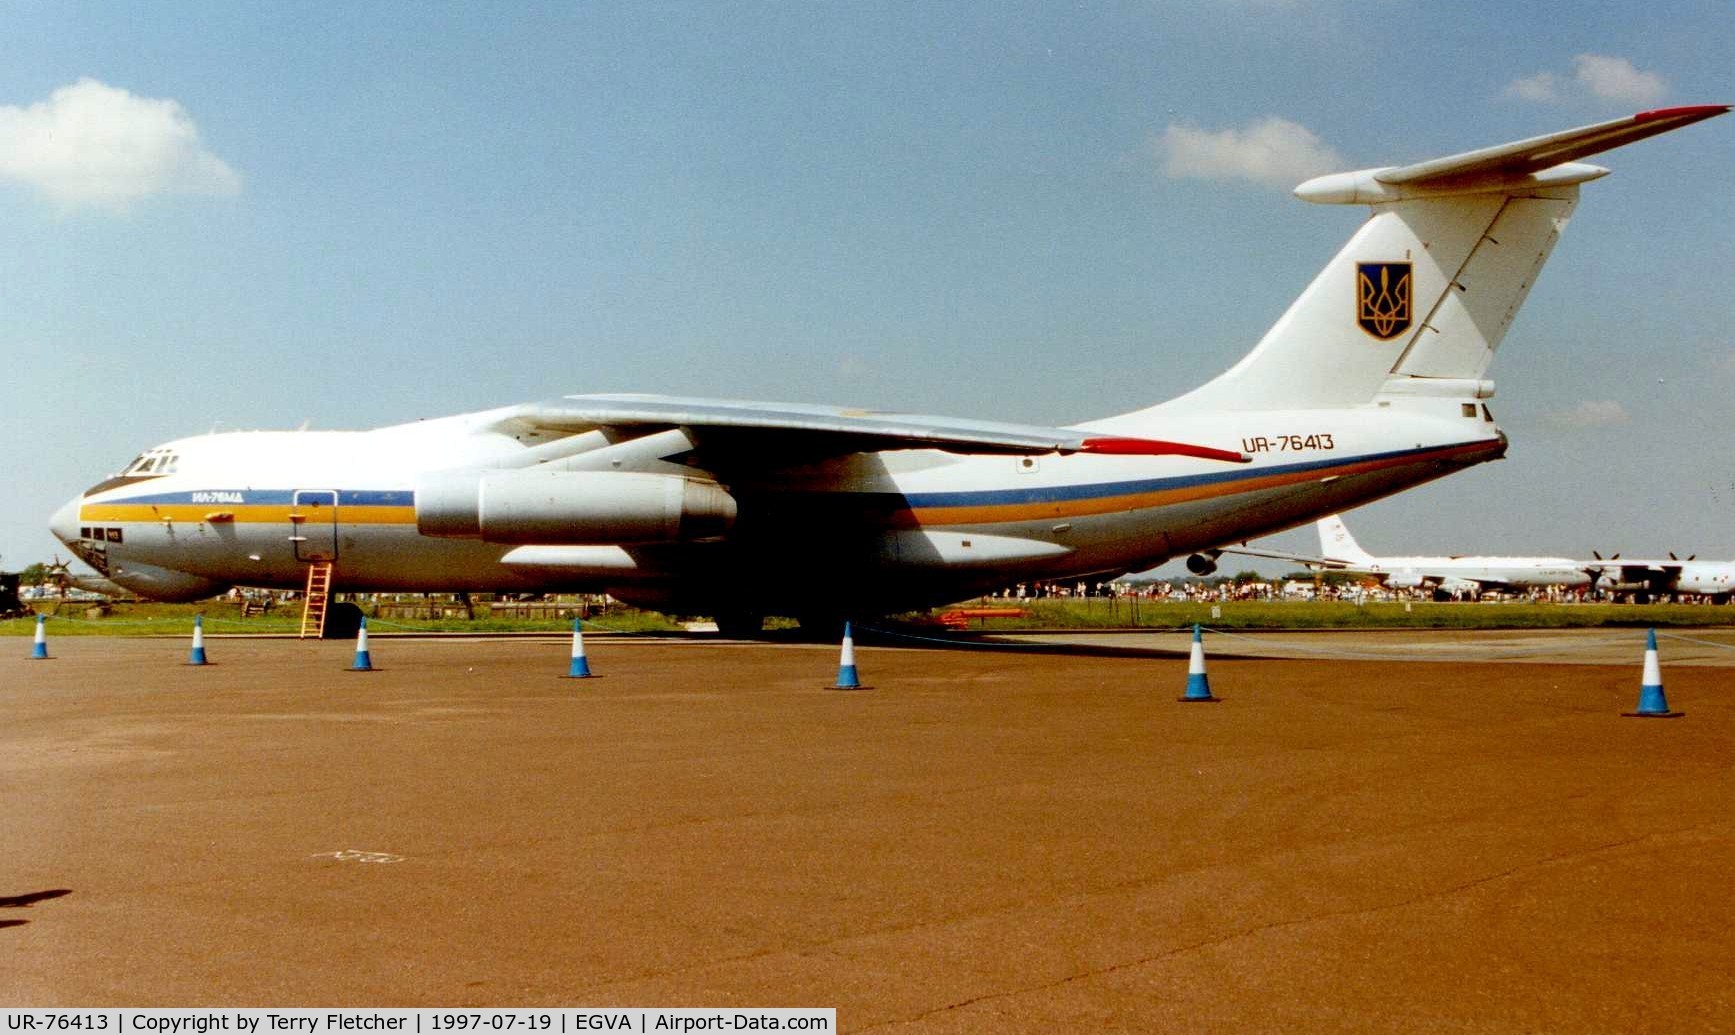 UR-76413, 1991 Ilyushin IL-76MD C/N 1013407215, Displayed at the 1997 Fairford Air Tattoo